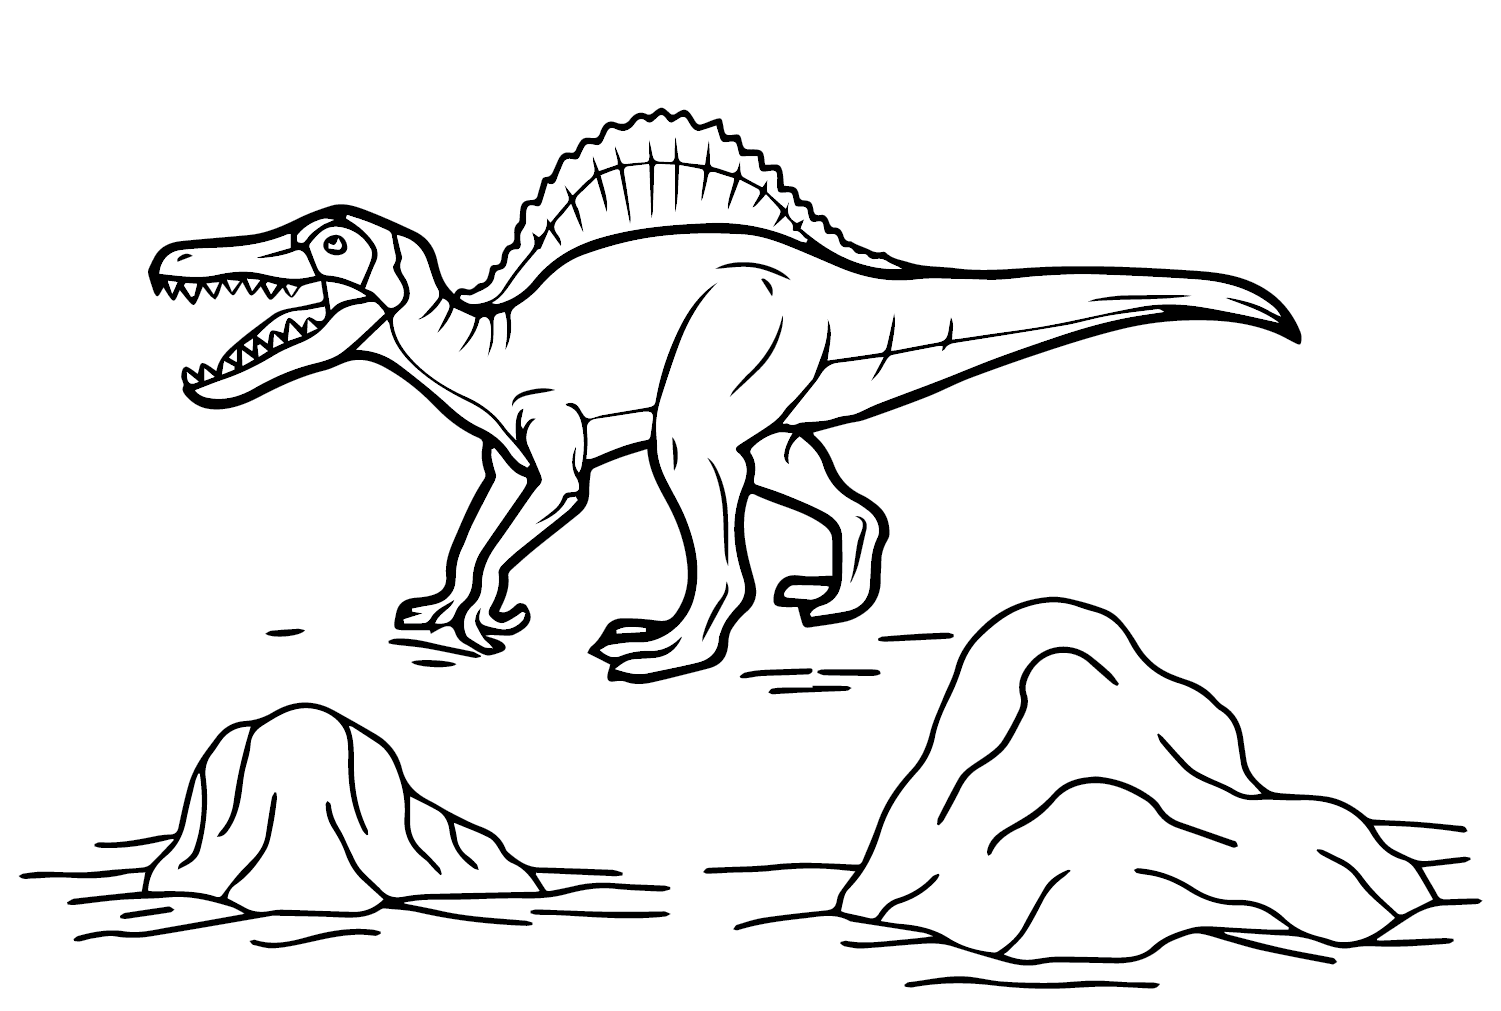 Free Printable Spinosaurus Aegyptiacus Coloring Page from Spinosaurus Aegyptiacus